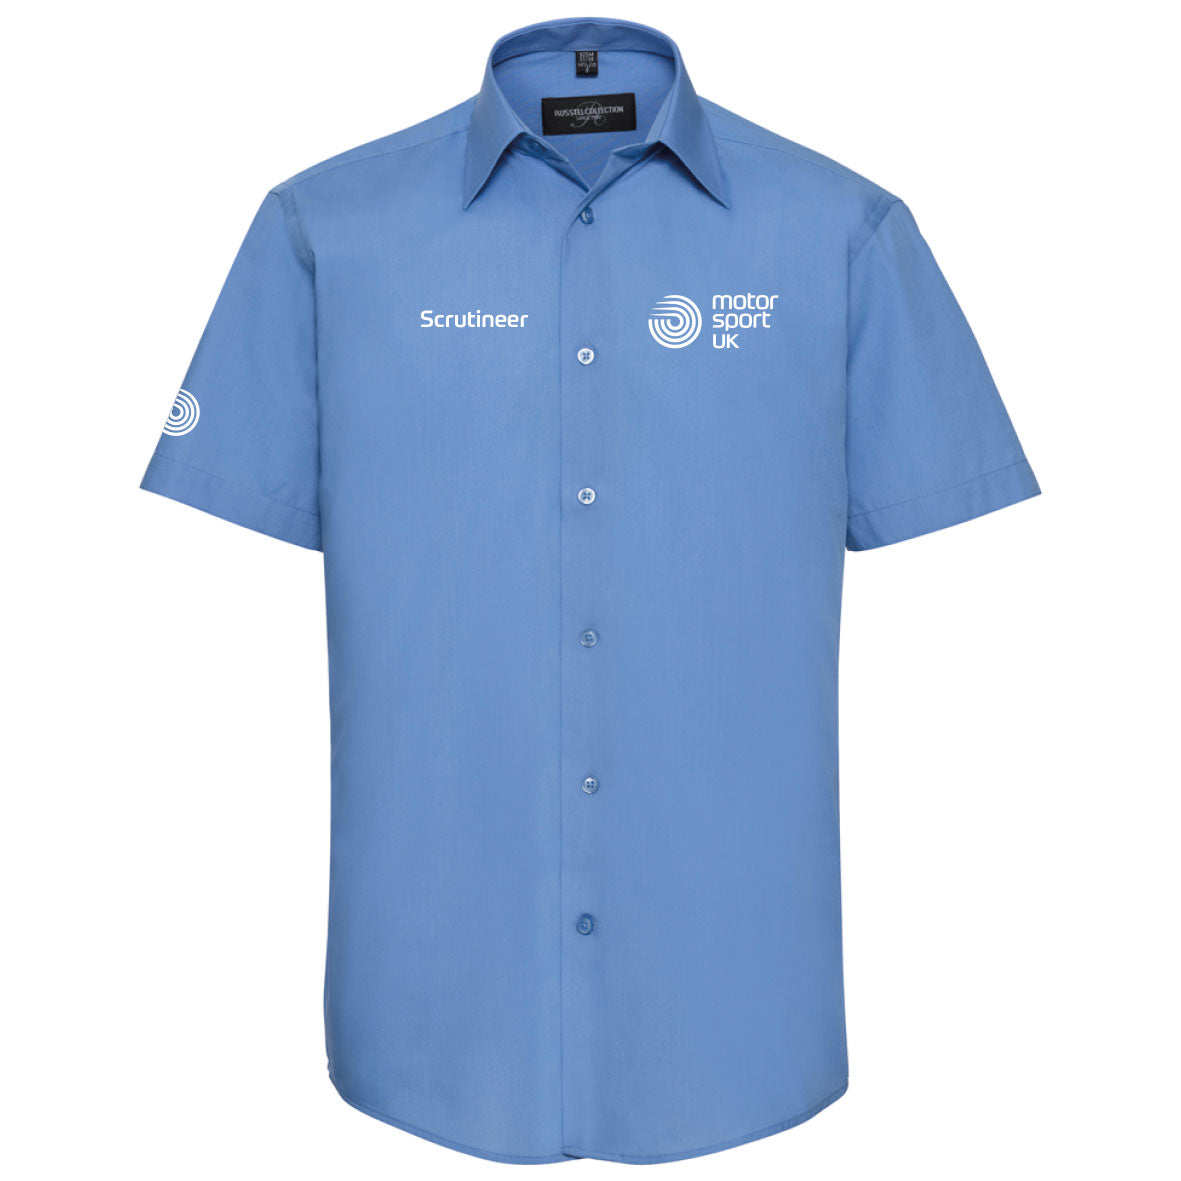 MSUK Mens S/S Shirt - Corporate Blue